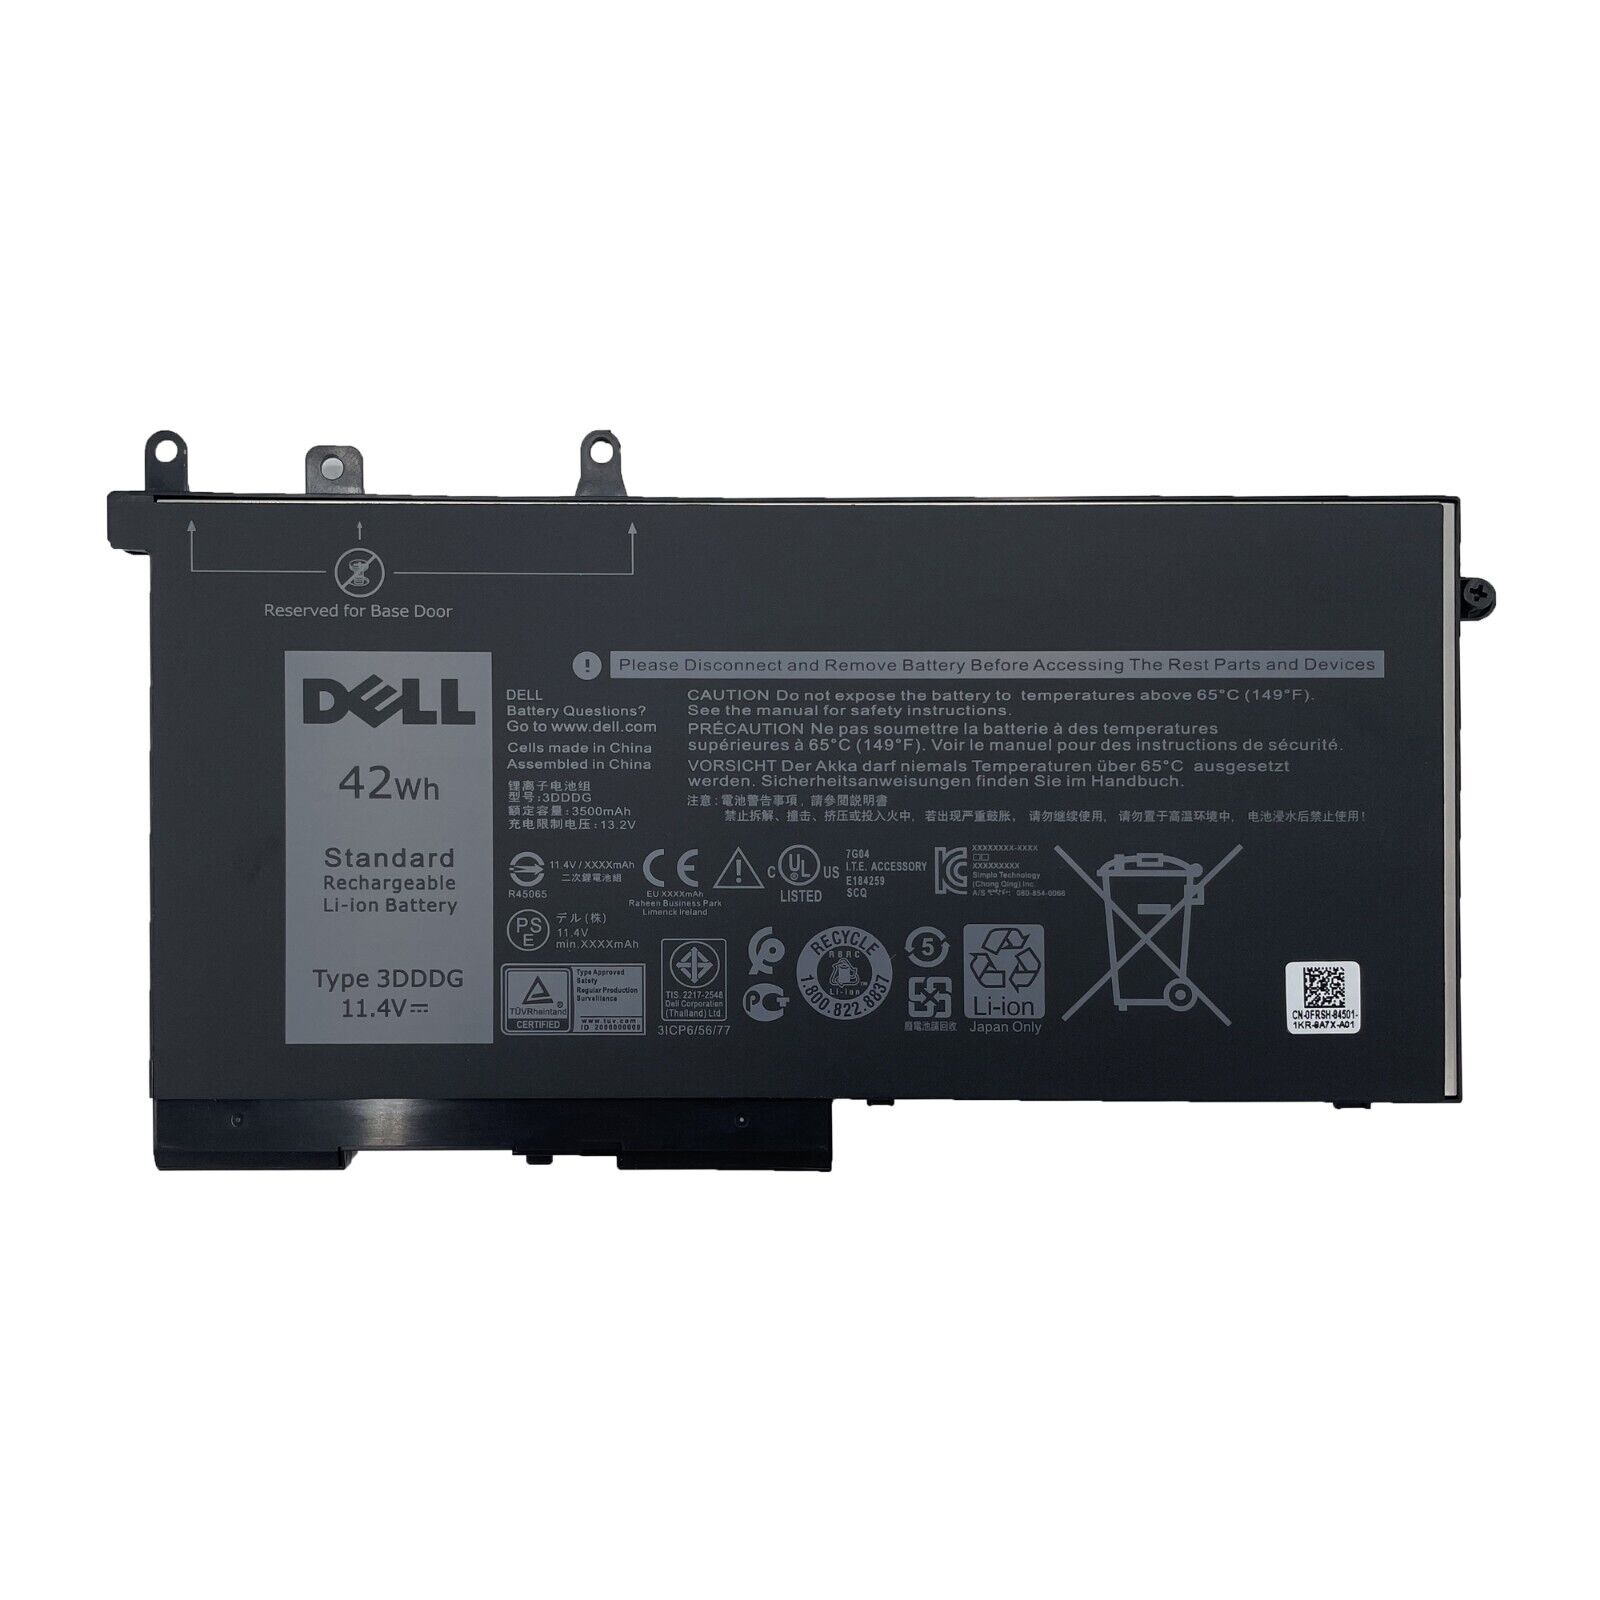 Genuine OEM 42WH 3DDDG Battery For Dell Latitude 5280 5480 5490 5491 5495 45N3J